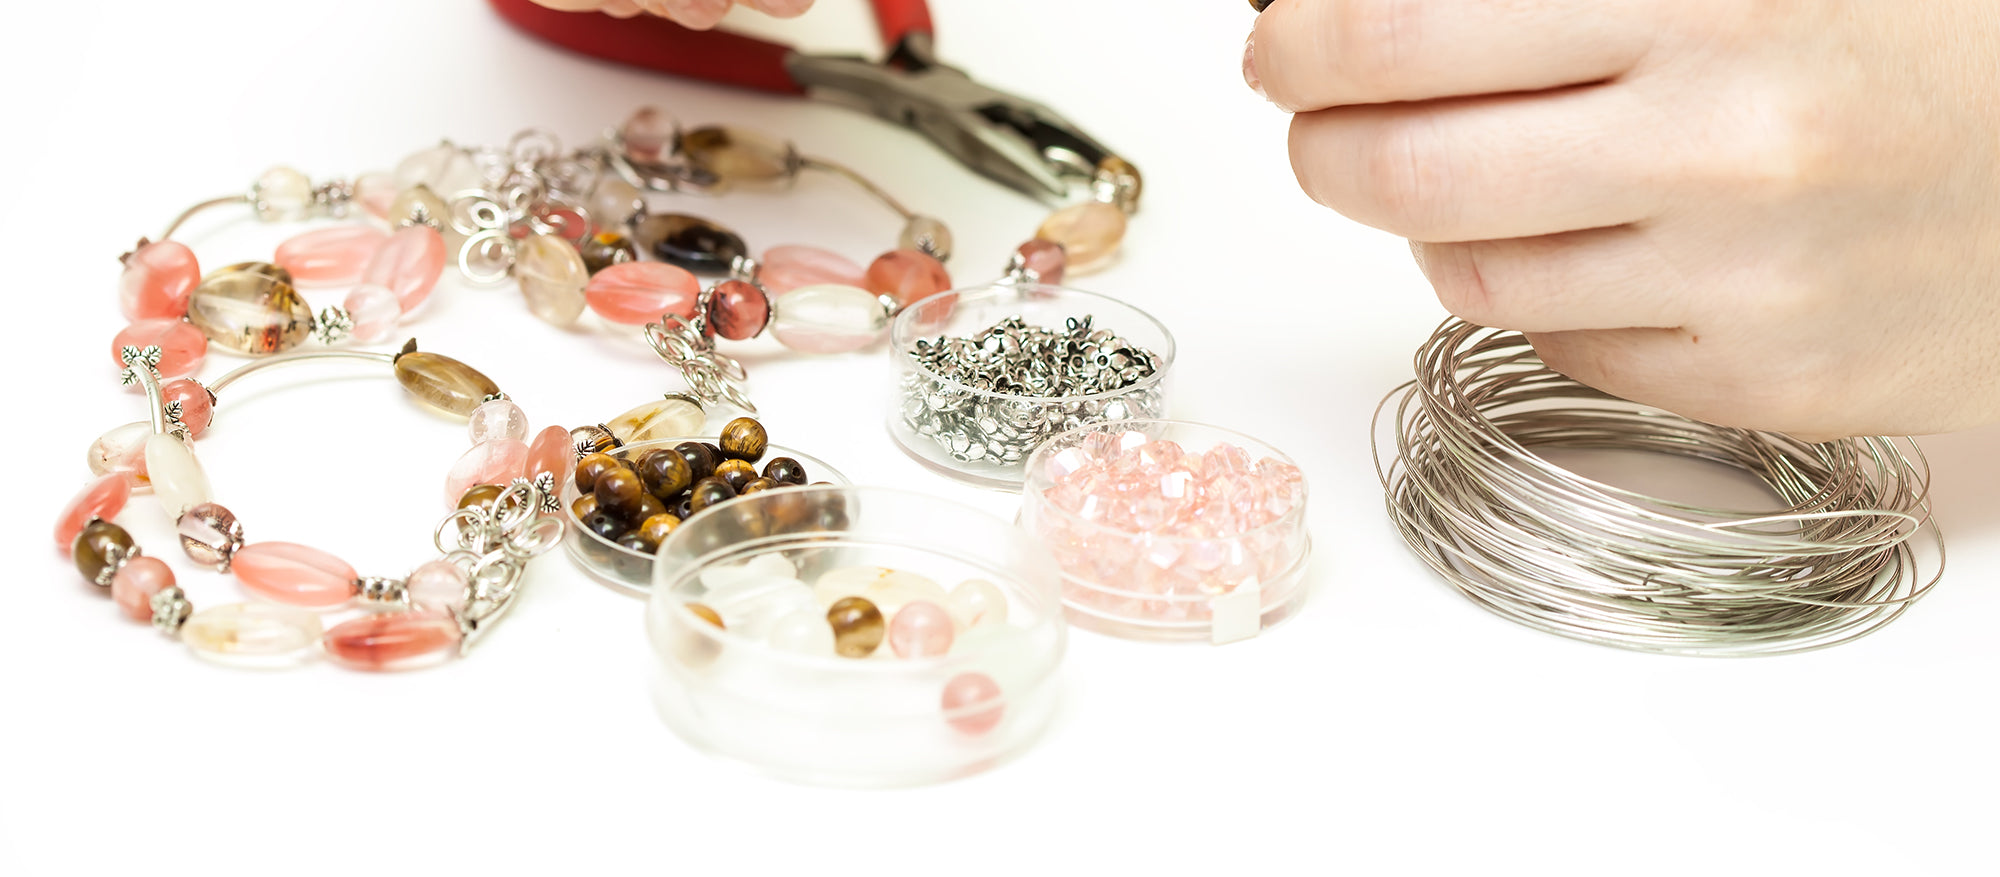 Jewelry Stringing Materials   - Jewelry Supplies